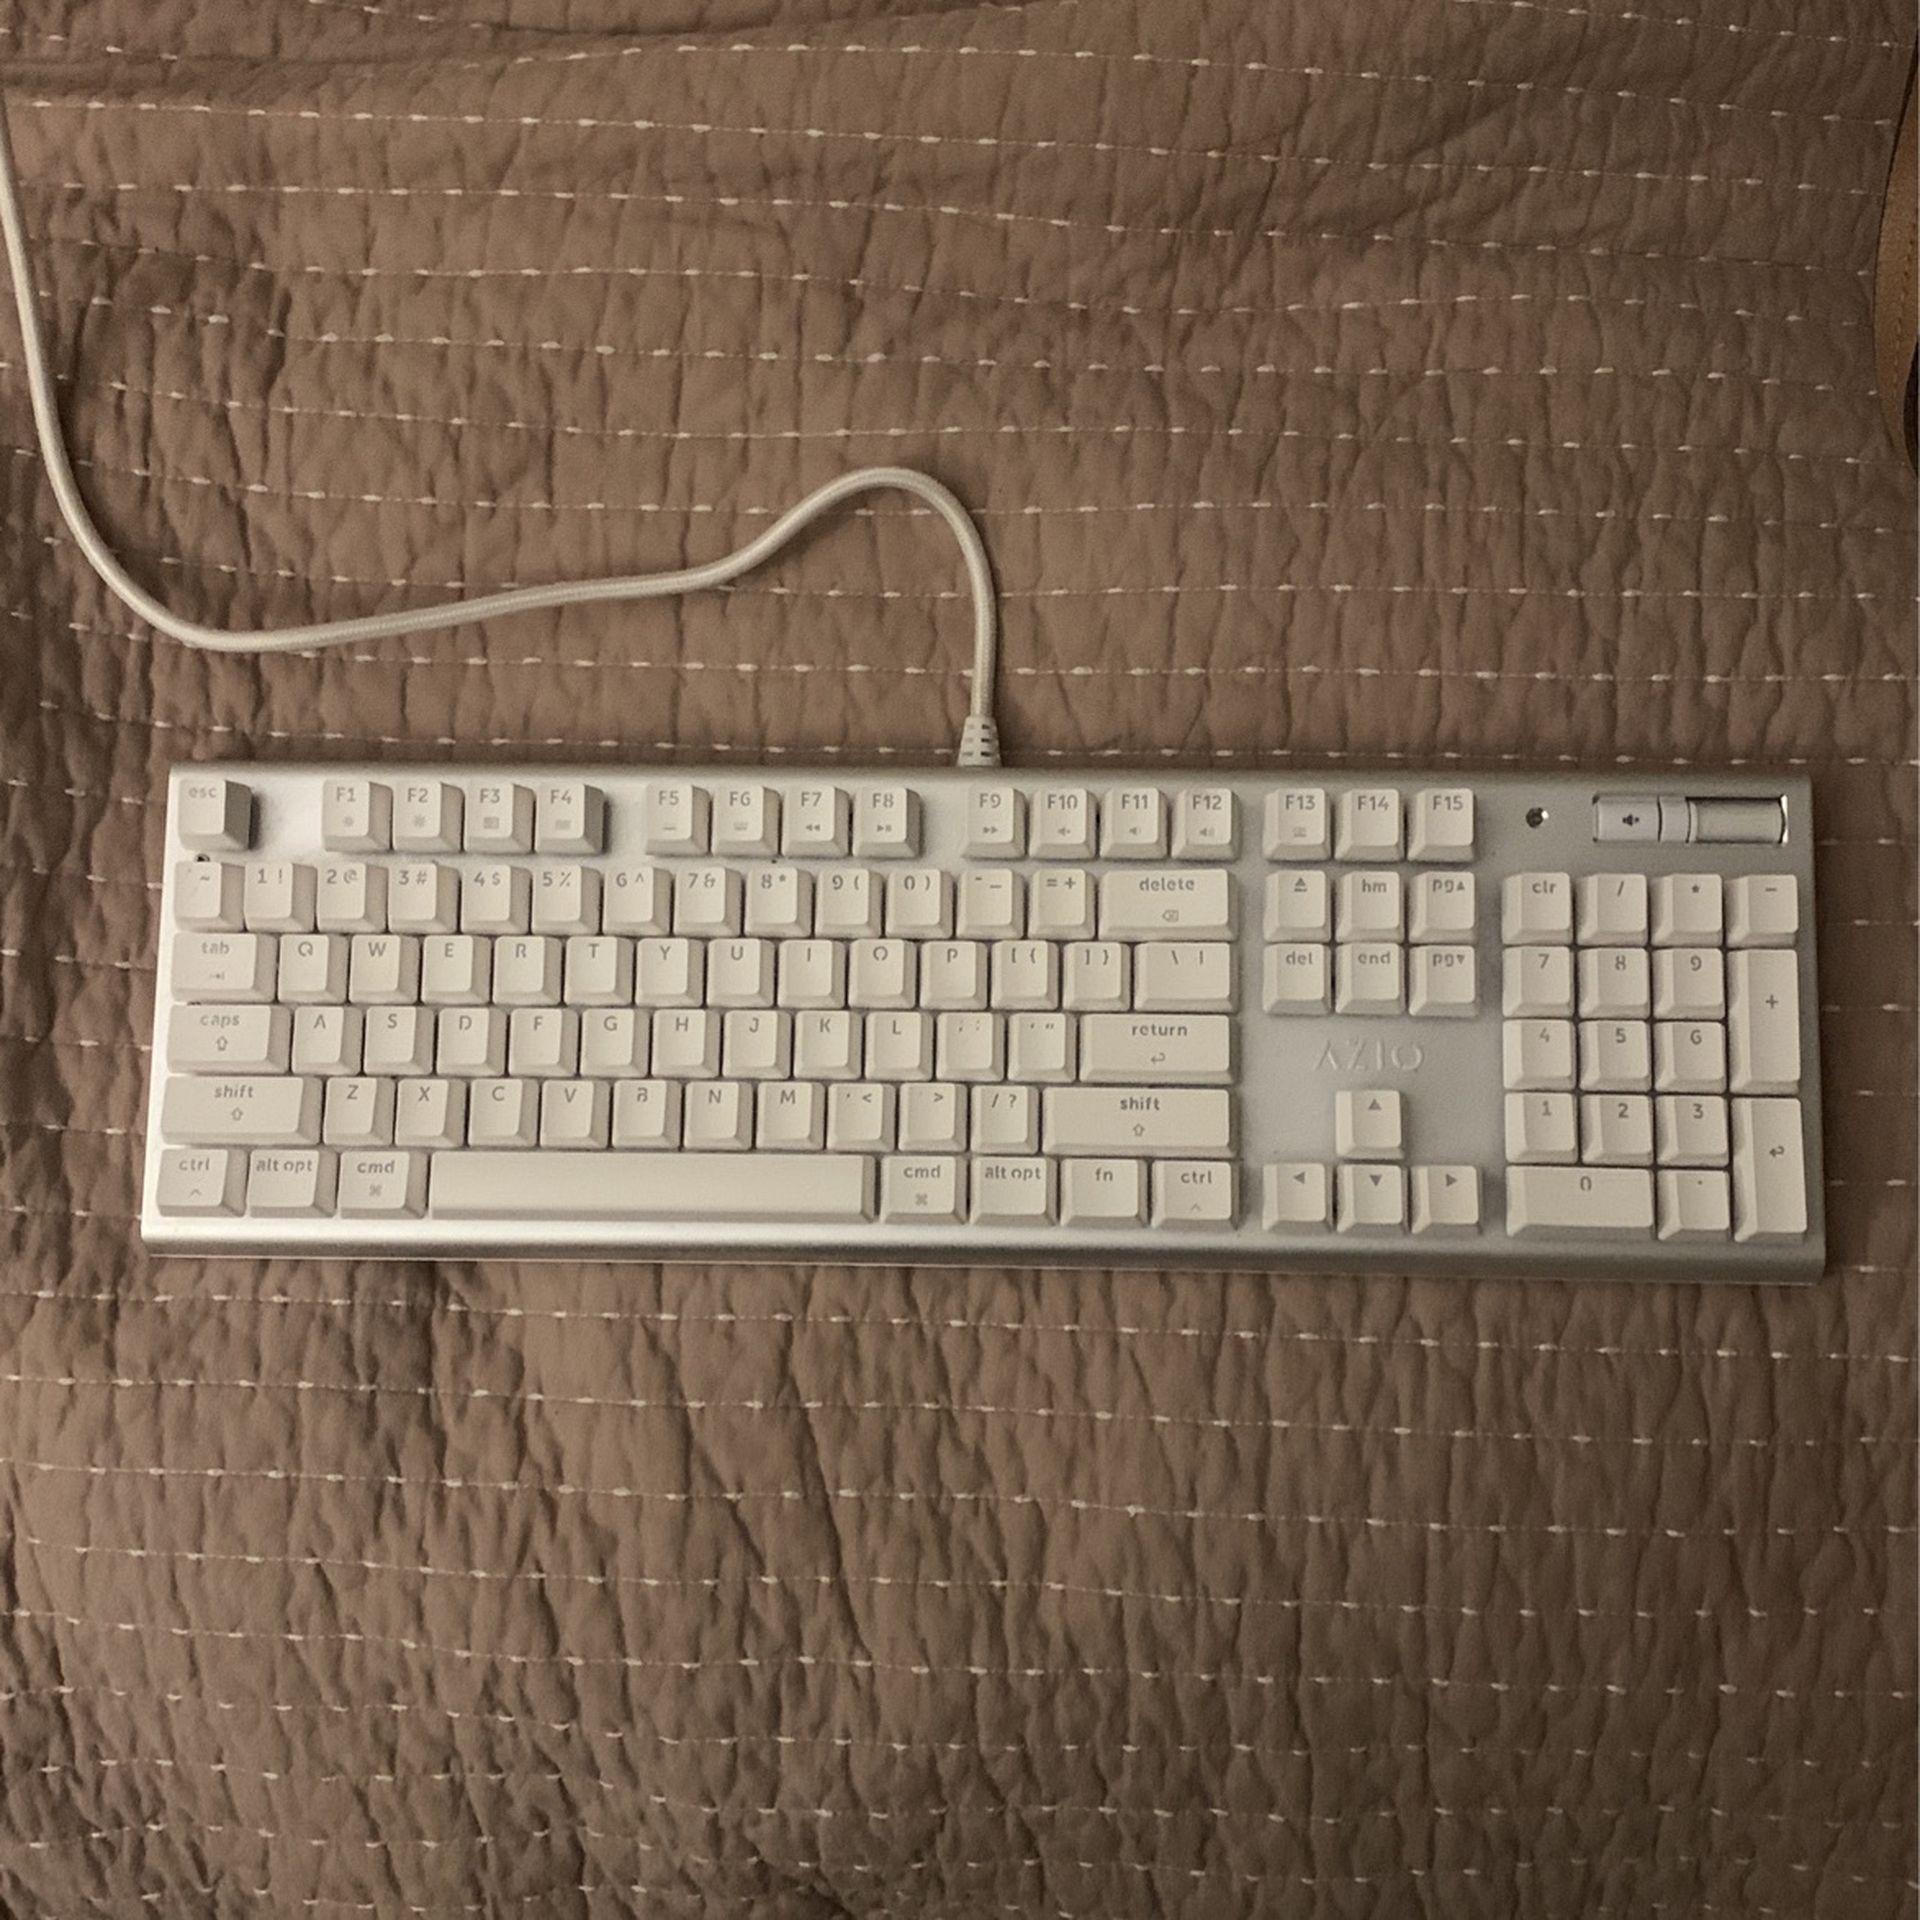 AZIO White Mechanical Keyboard